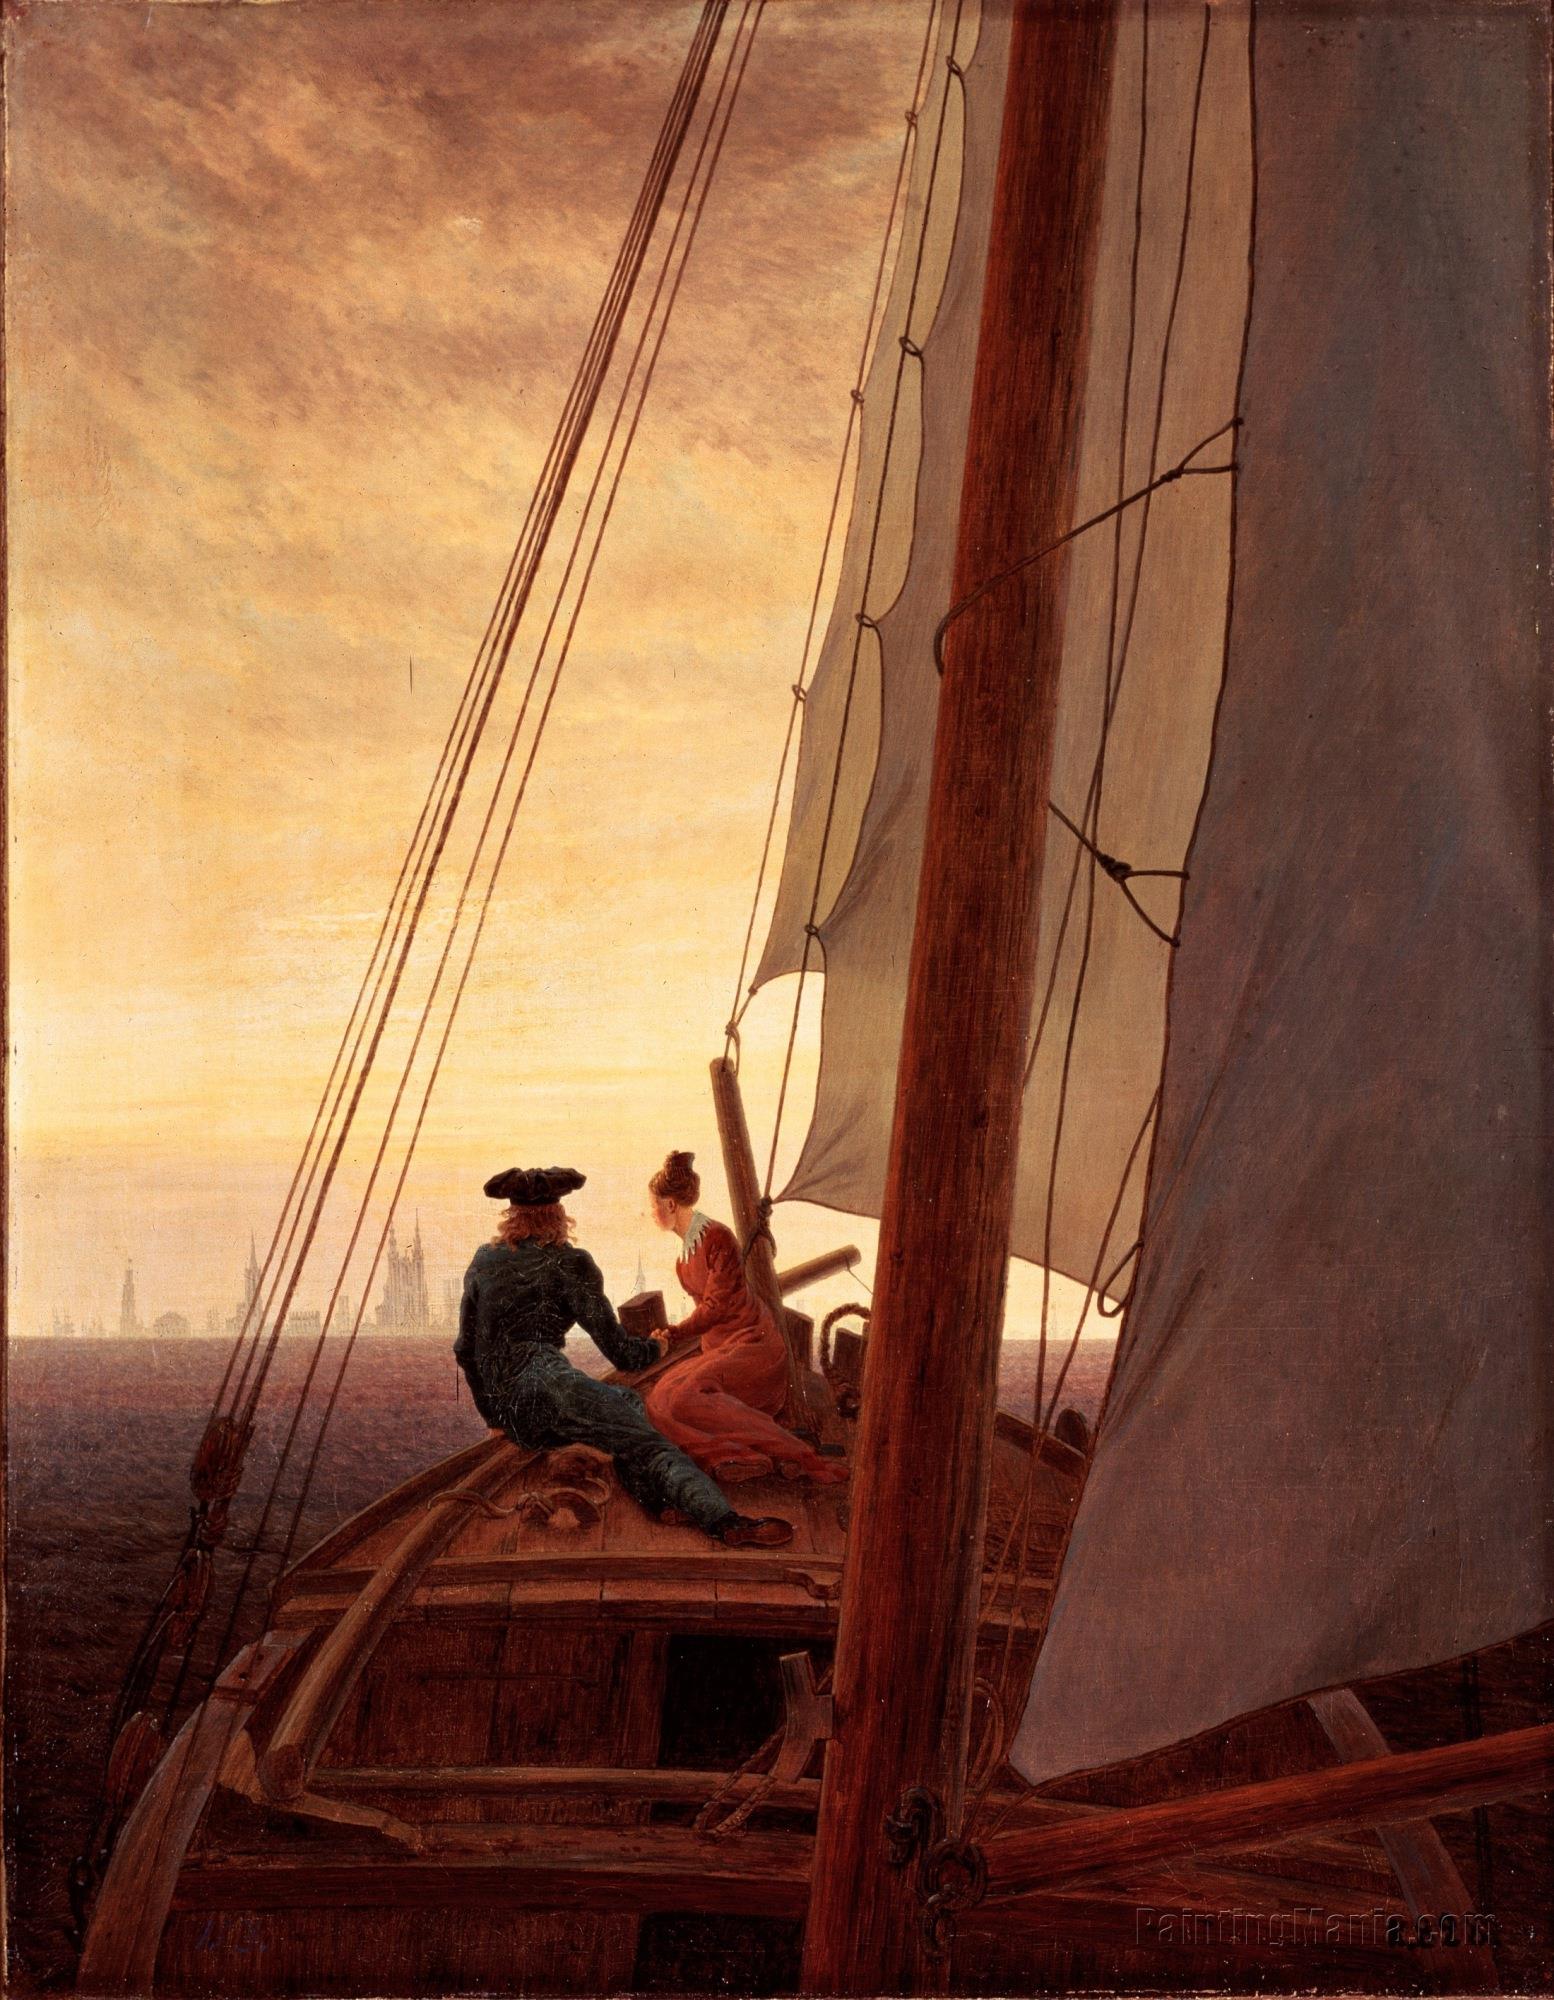 On a Sailing Ship